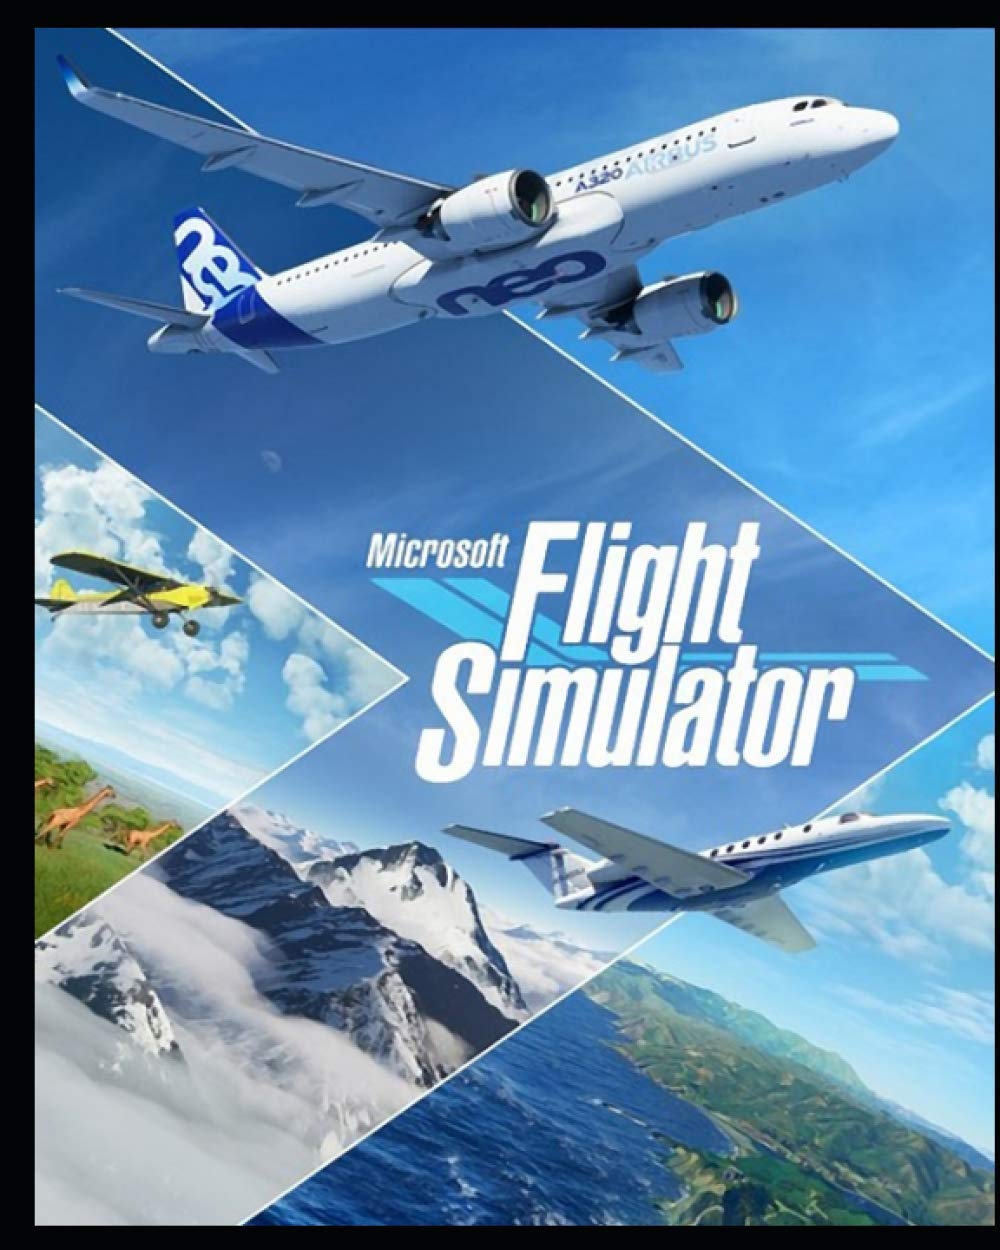 How long is Microsoft Flight Simulator?